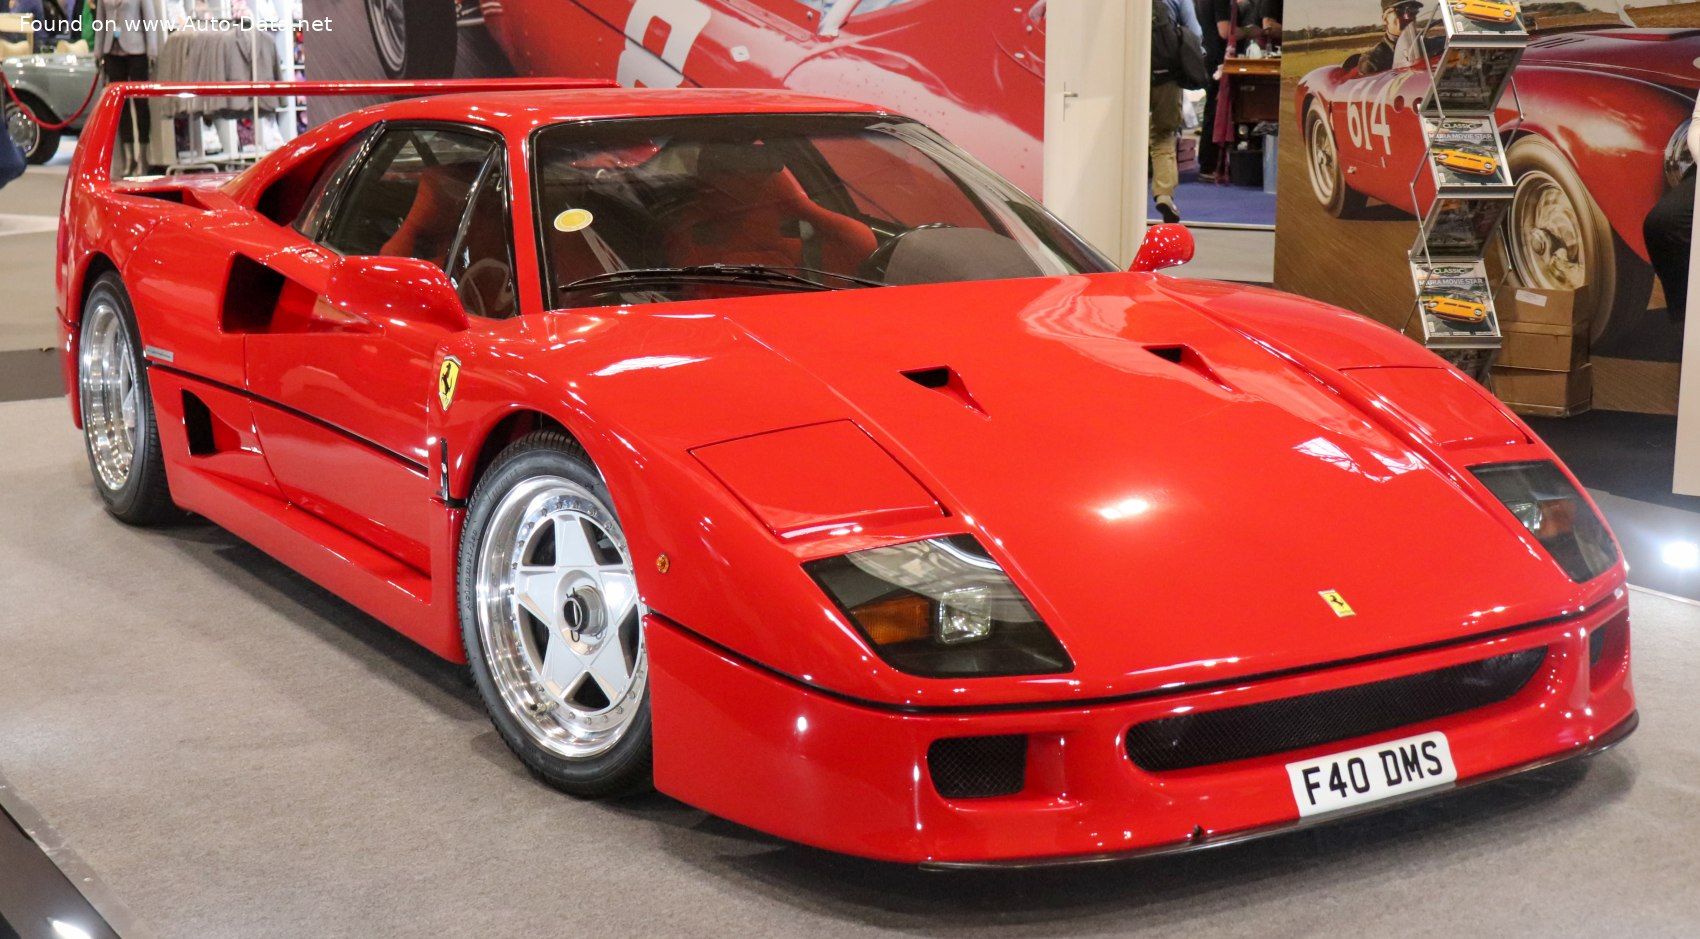 Ferrari F40, the last car Enzo Ferrari ever approved before his demise 